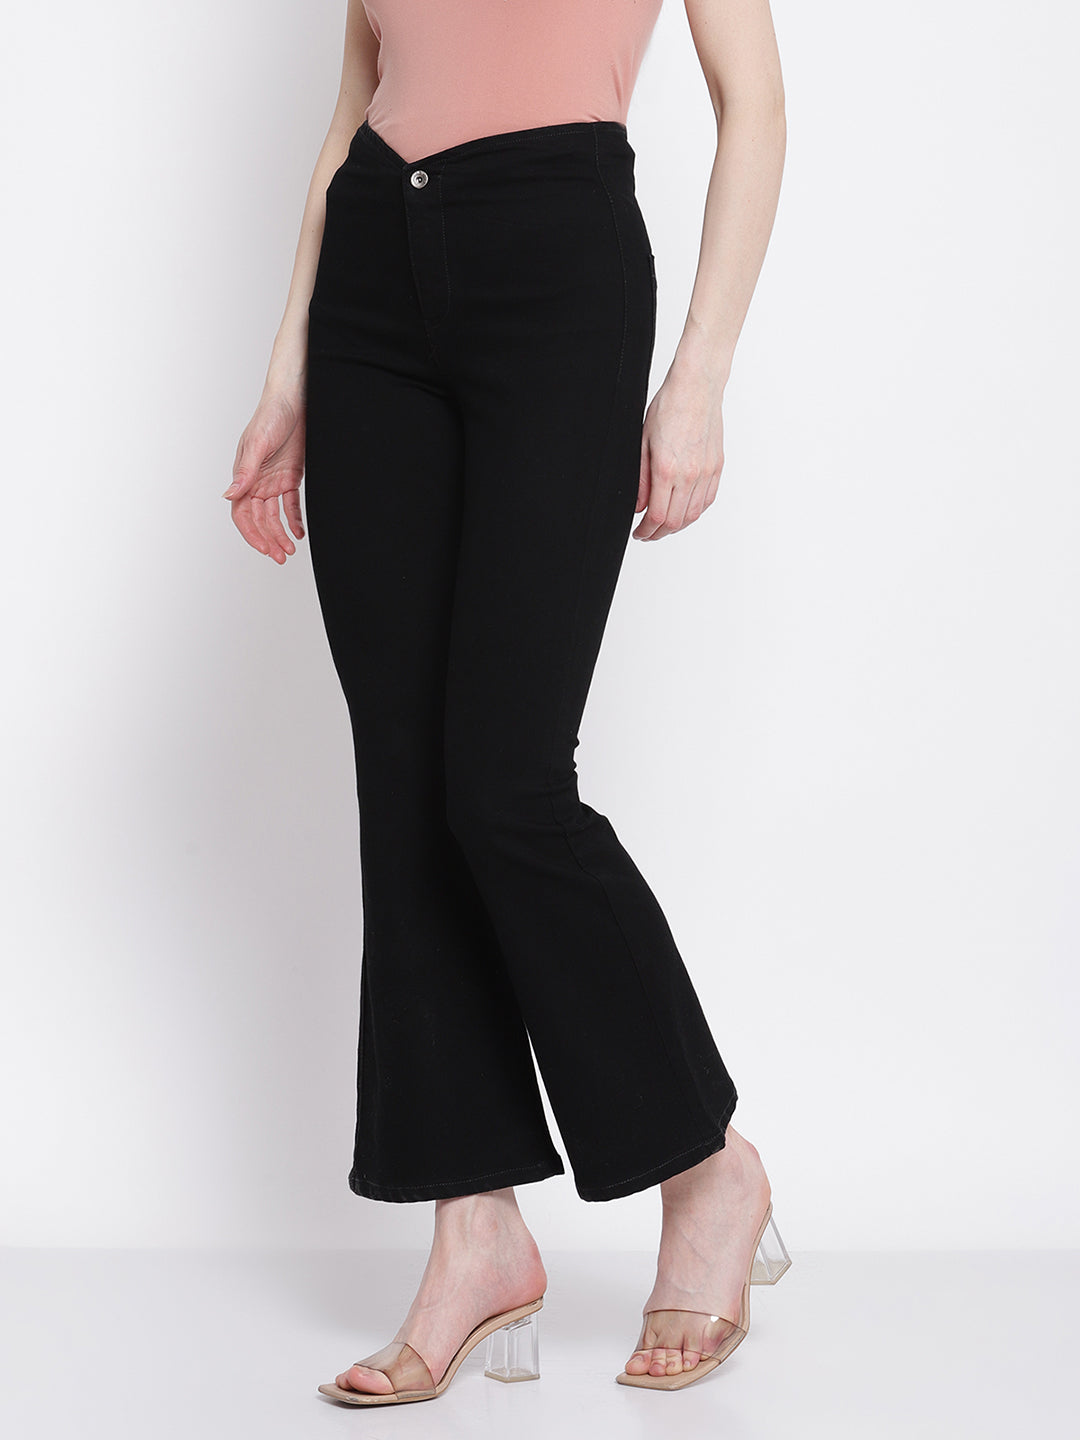 Buy Women's Slim Fit Formal Big Bell Bottom Pant Black (M) at Amazon.in